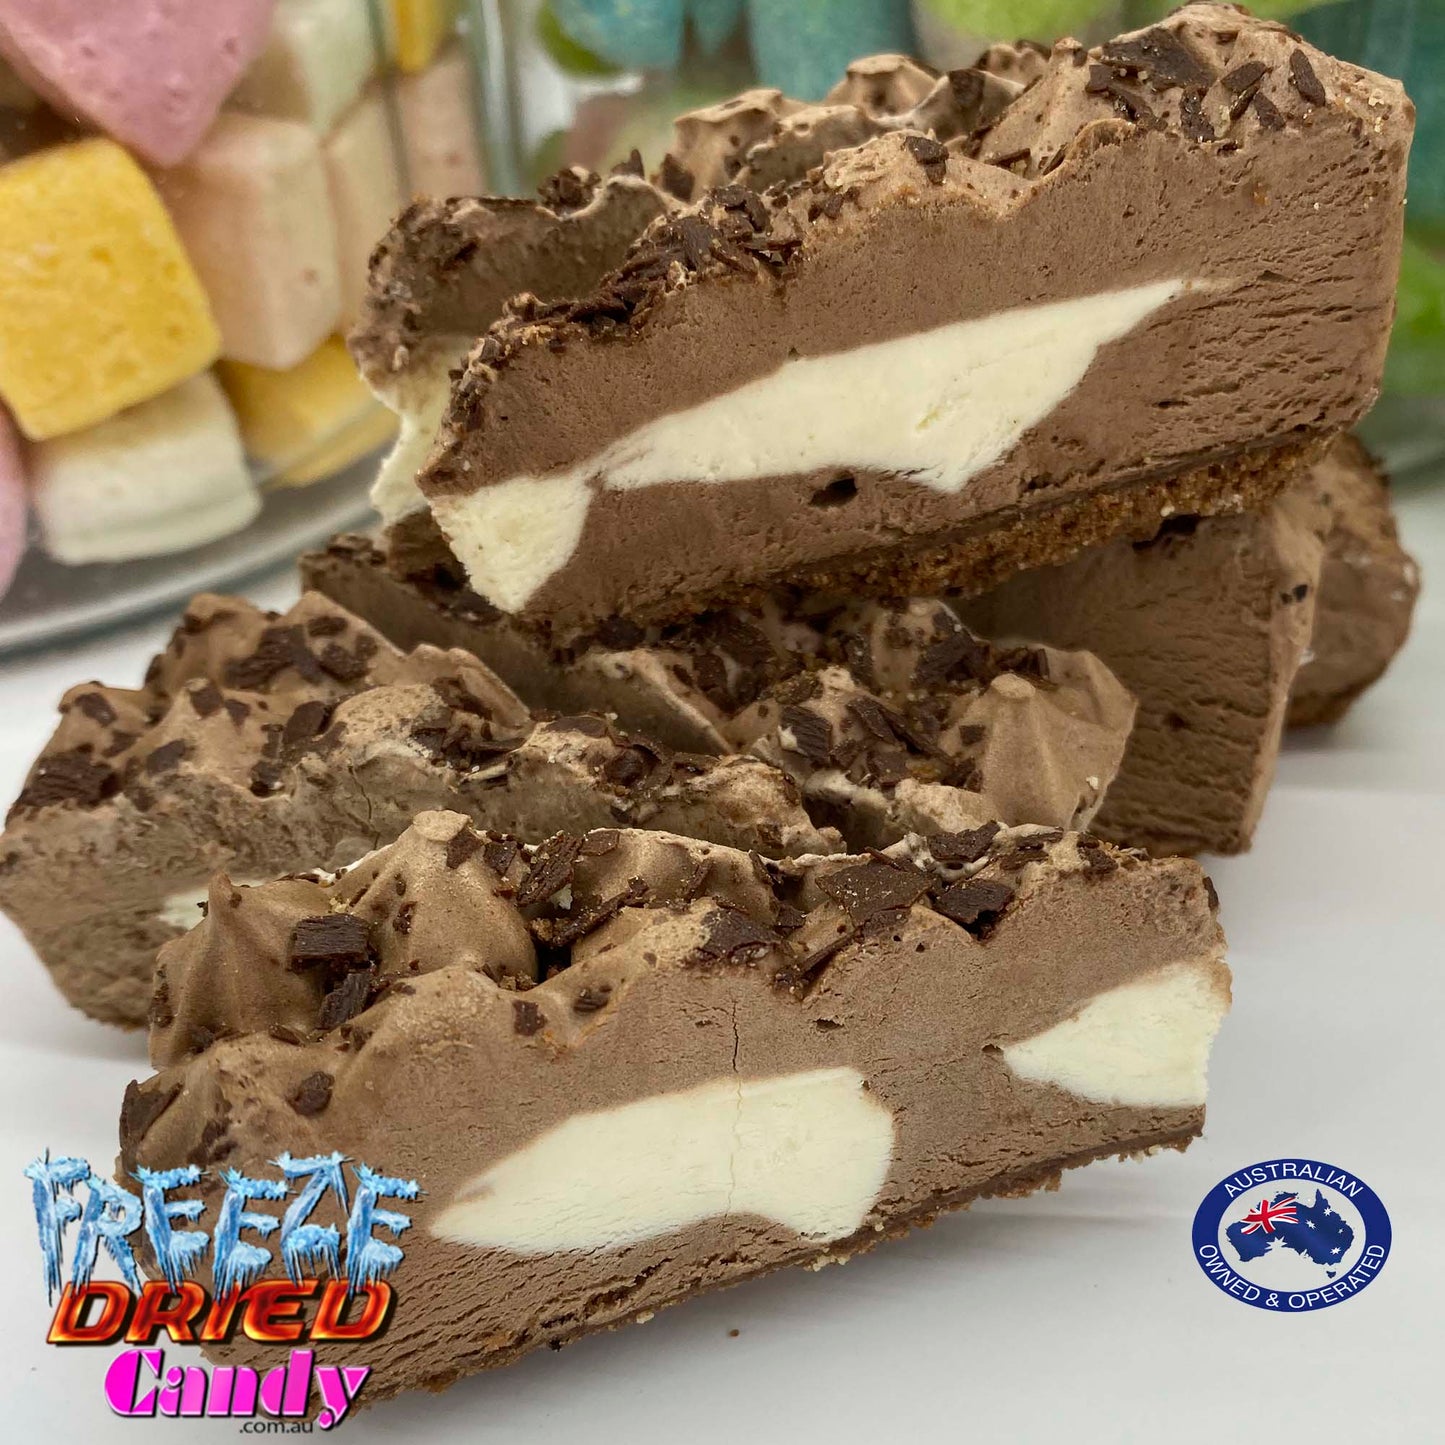 Freeze Dried Cheesecake - Chocolate Bavarian - Freeze Dried Candy Lollies Treats